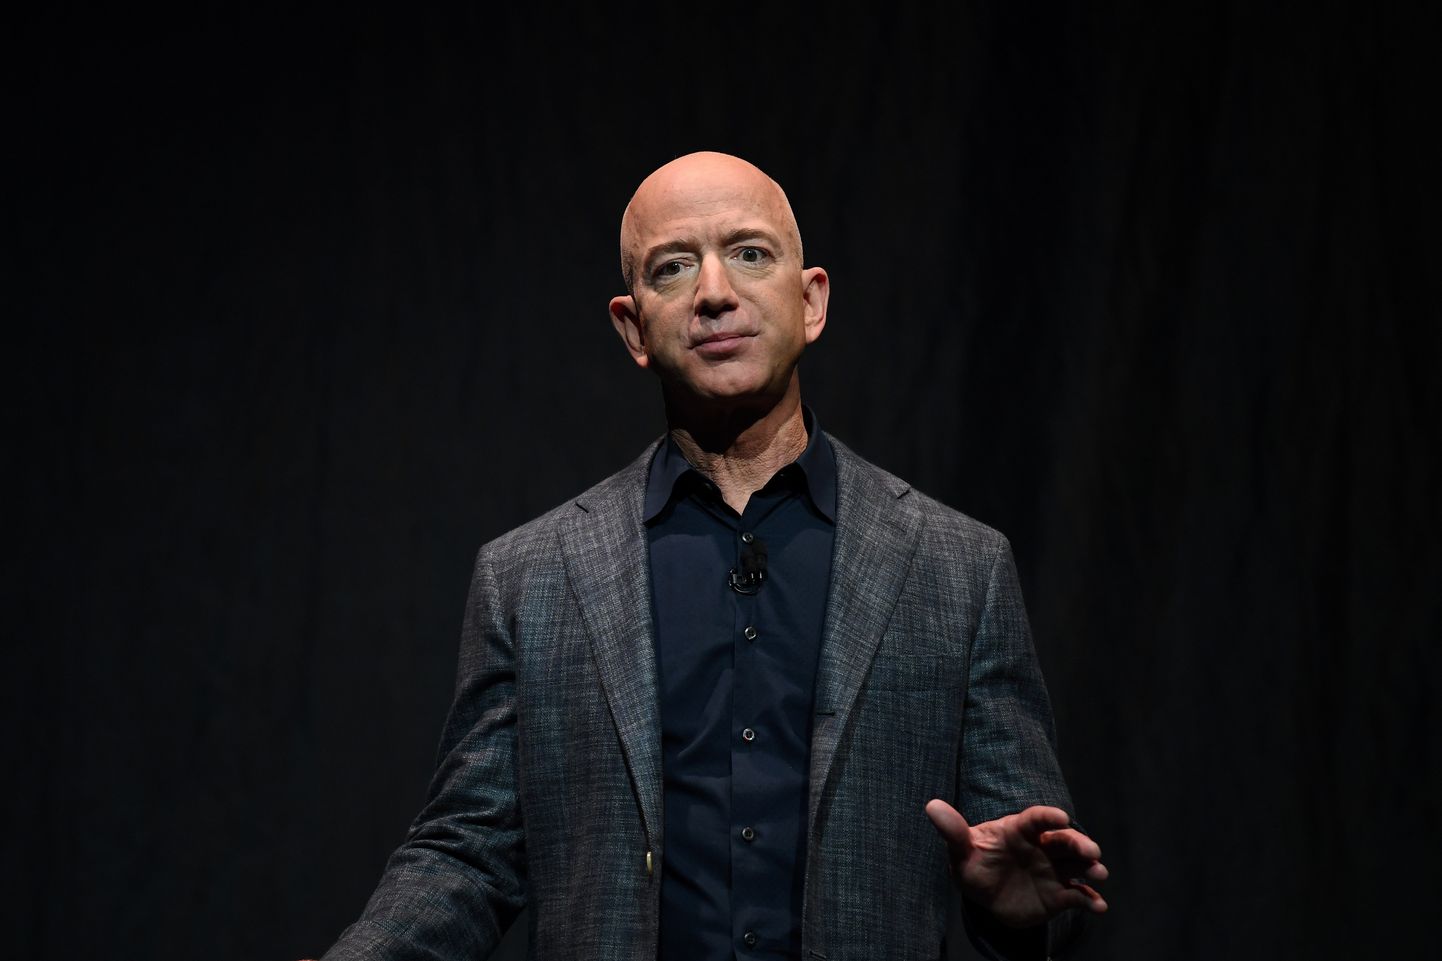 Jeff Bezos rääkimas 9. mail 2019 Washingtonis firma Blue Origins kosmoseuurmise plaanidest